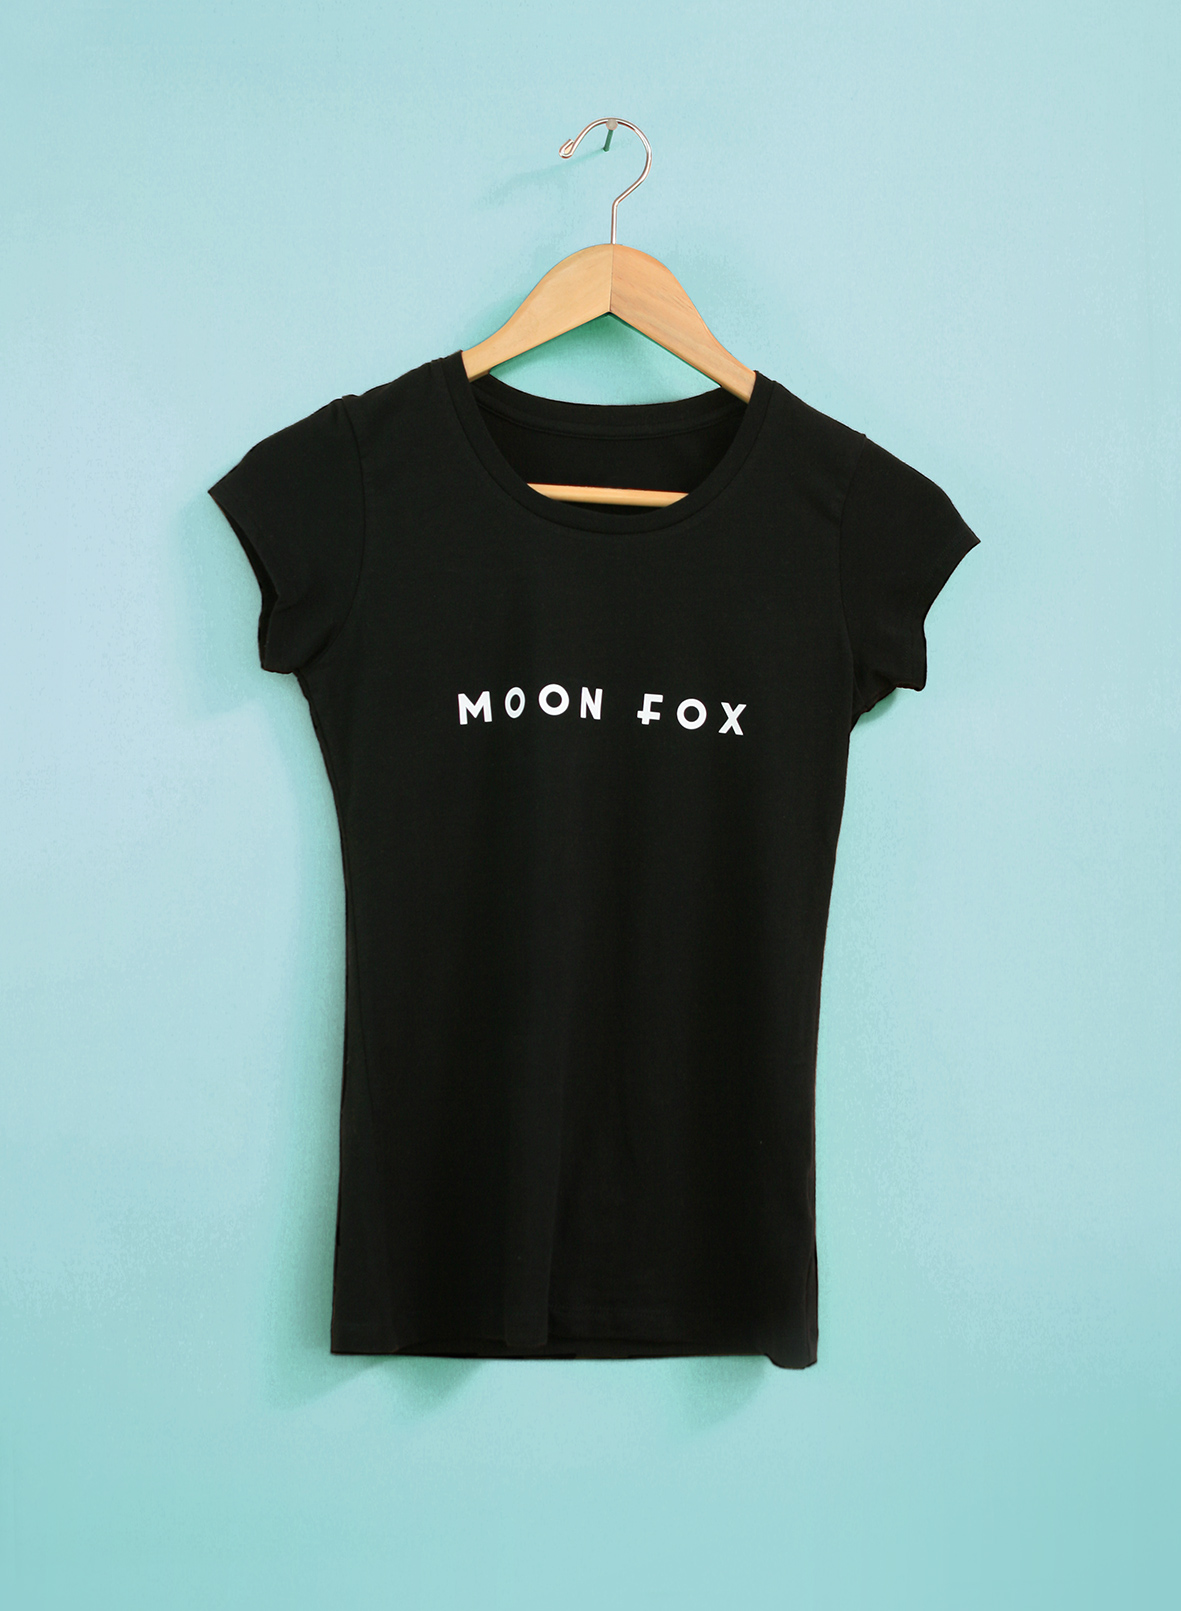 logo brand underwear model FOX moon design tag bag woman Label lingerie panties bra Logotype